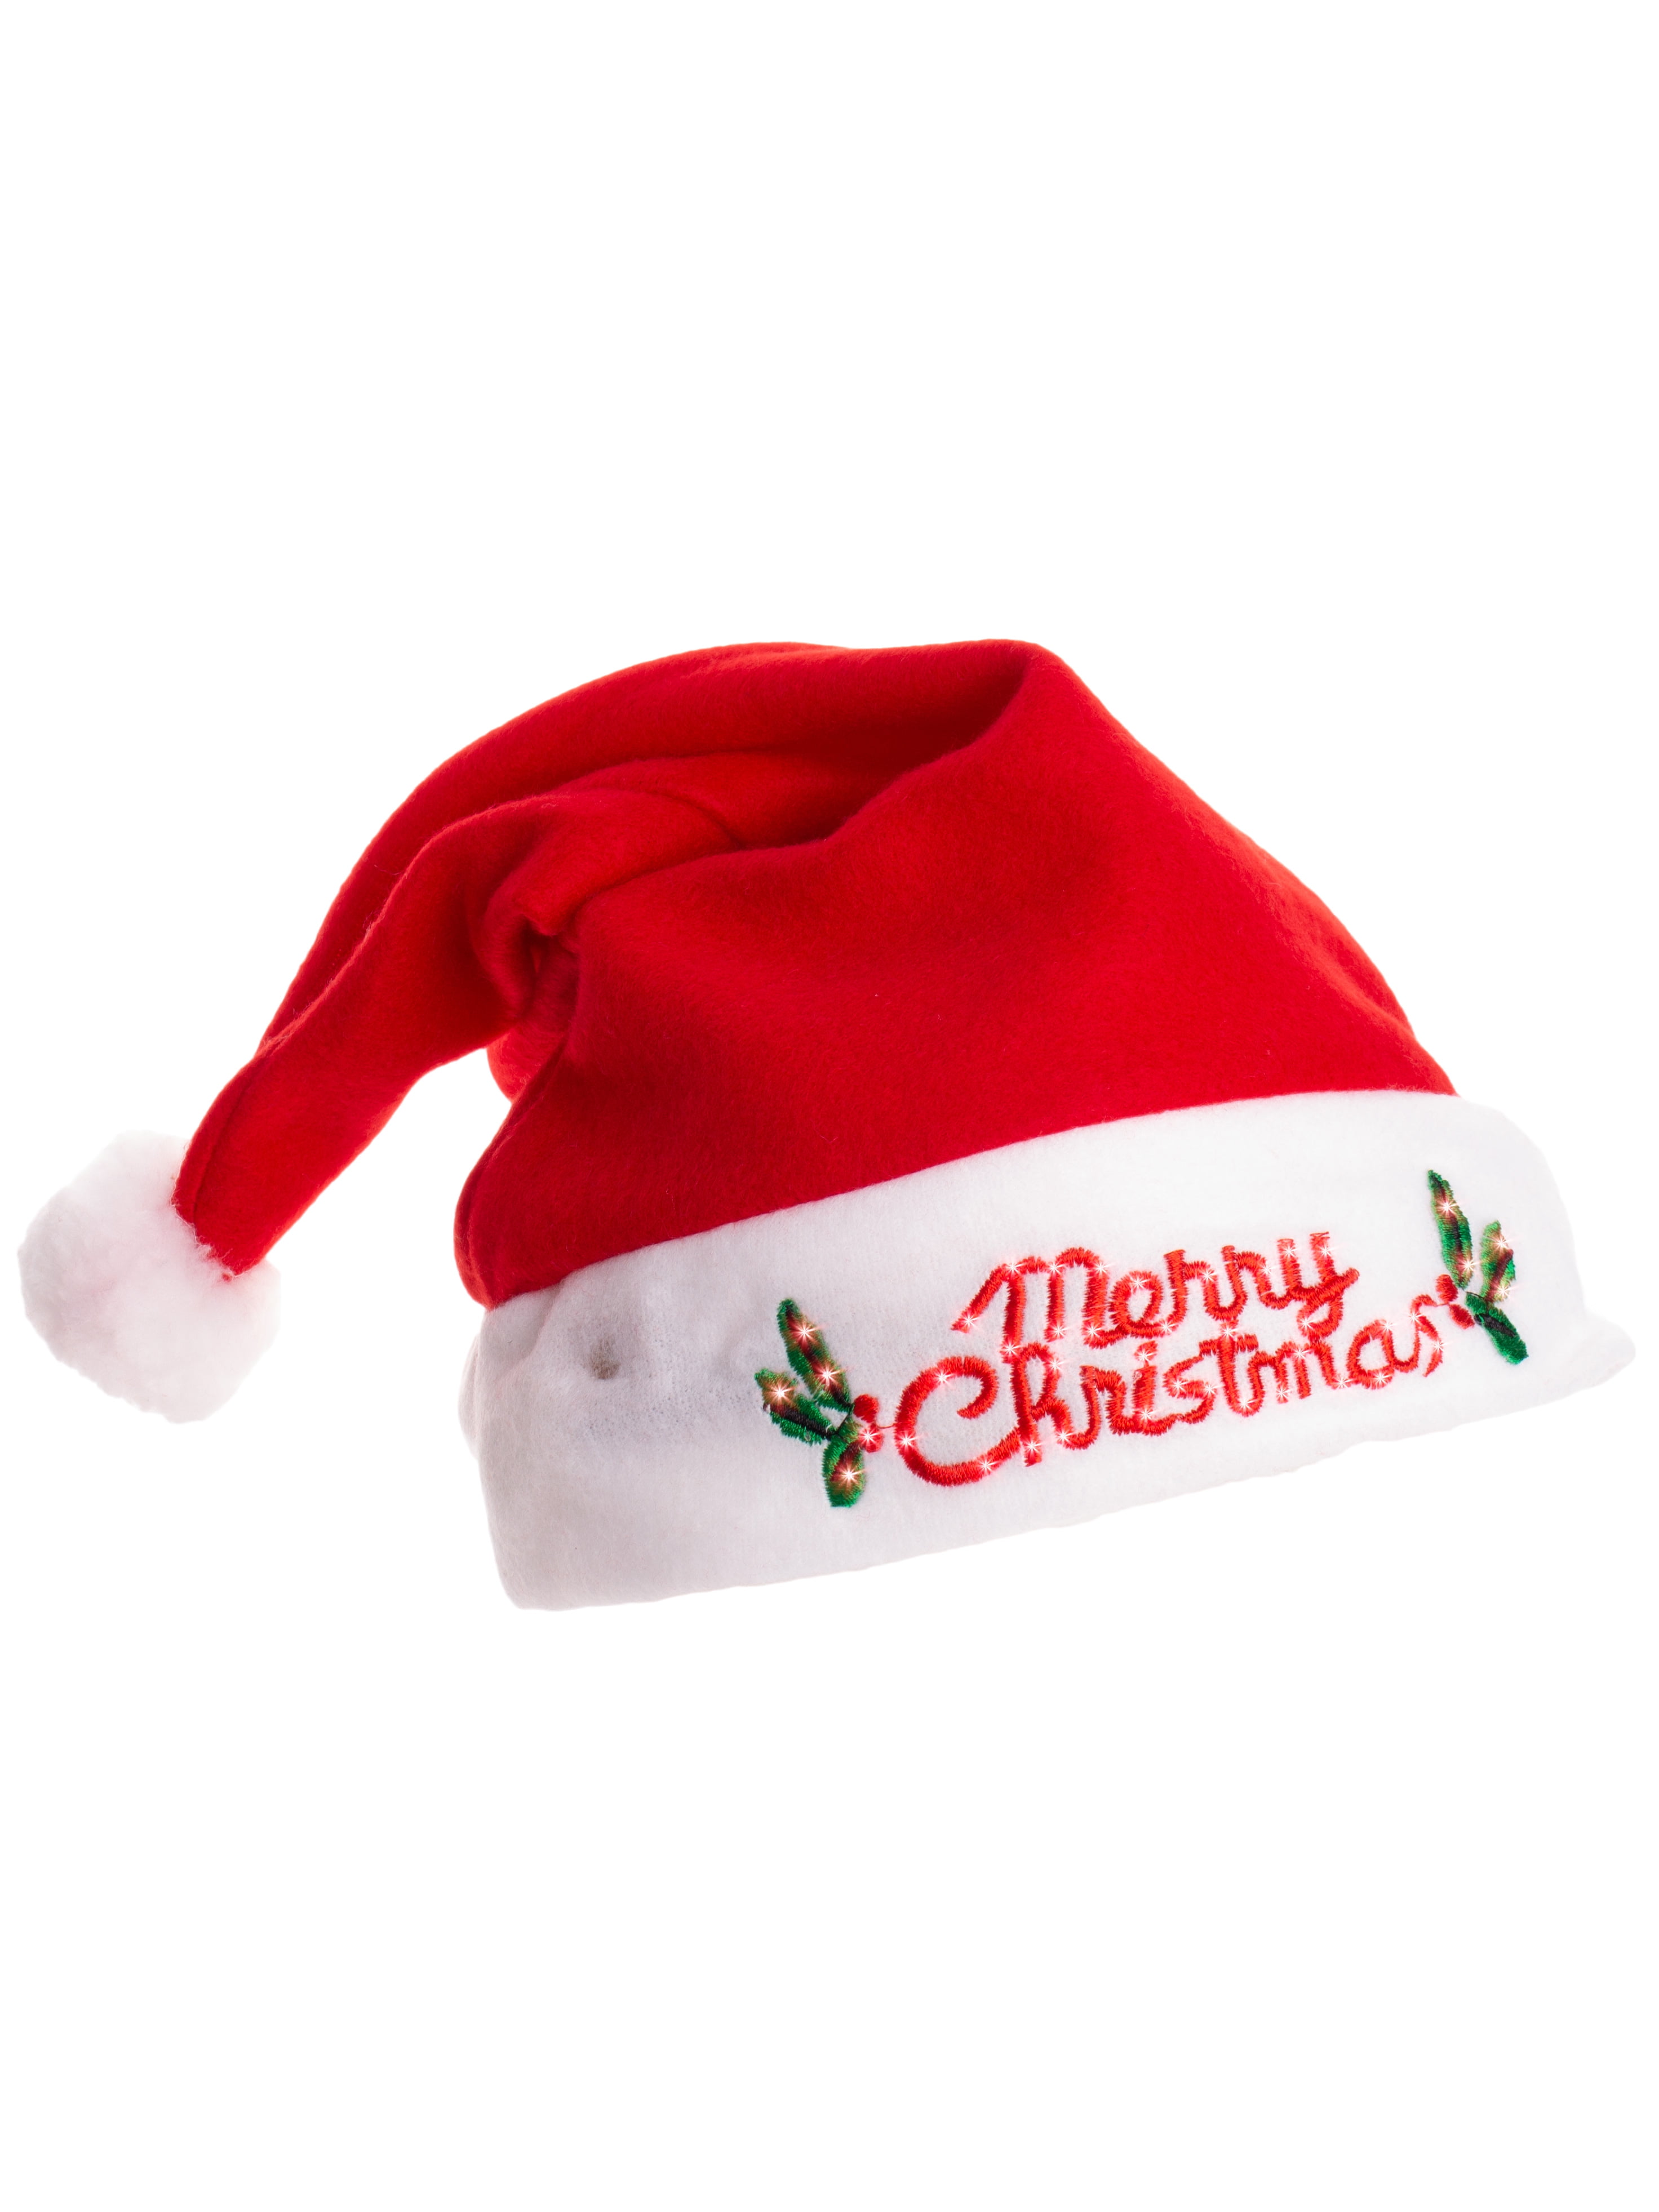 Merry Christmas Bristol City Fan Santa Hat 